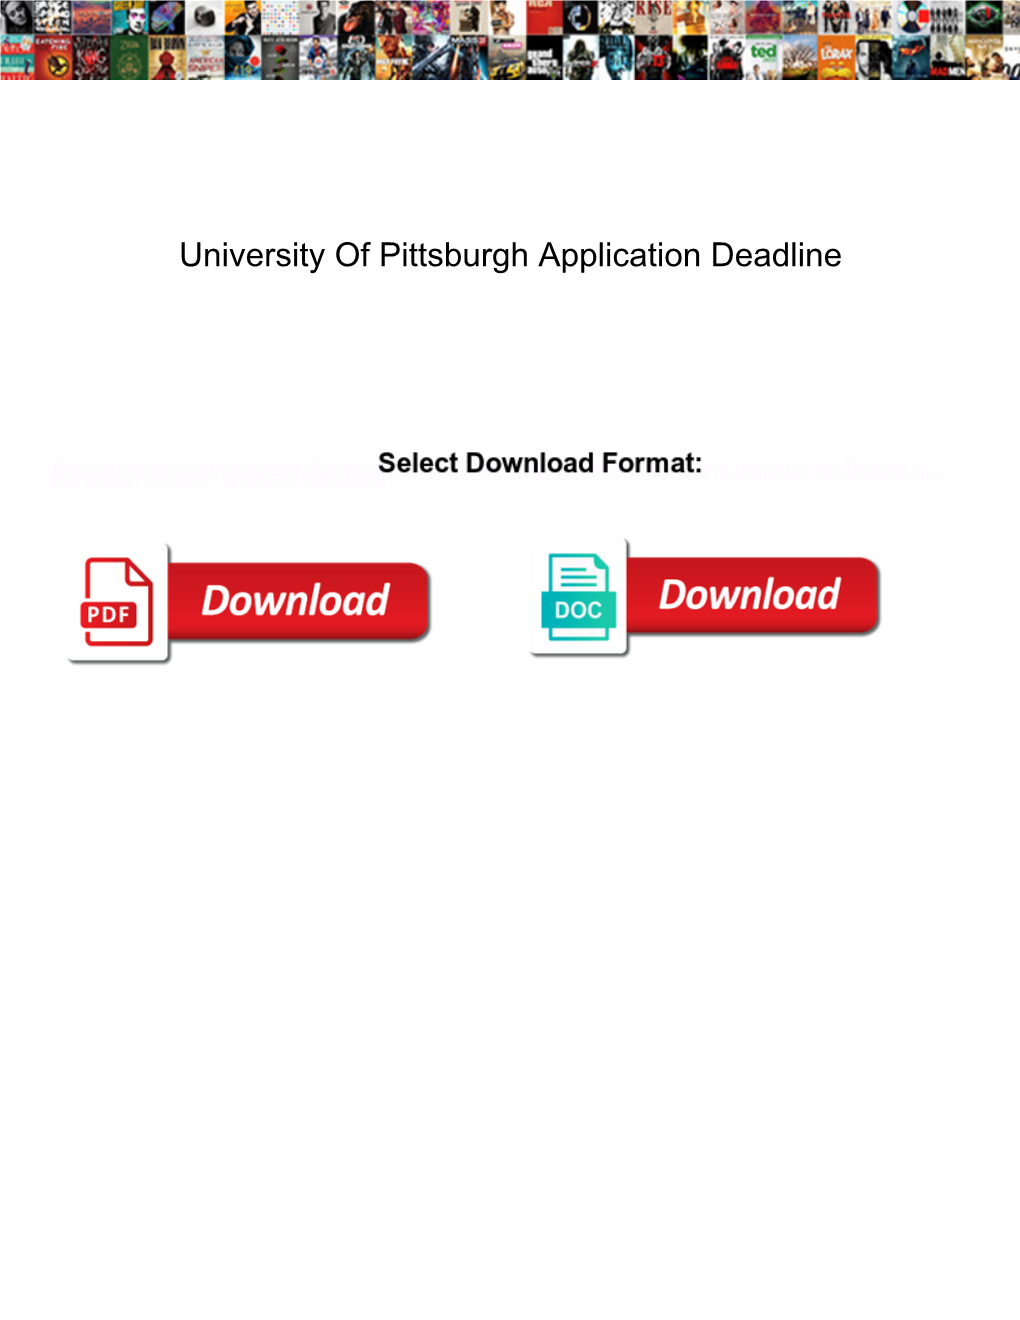 University of Pittsburgh Application Deadline